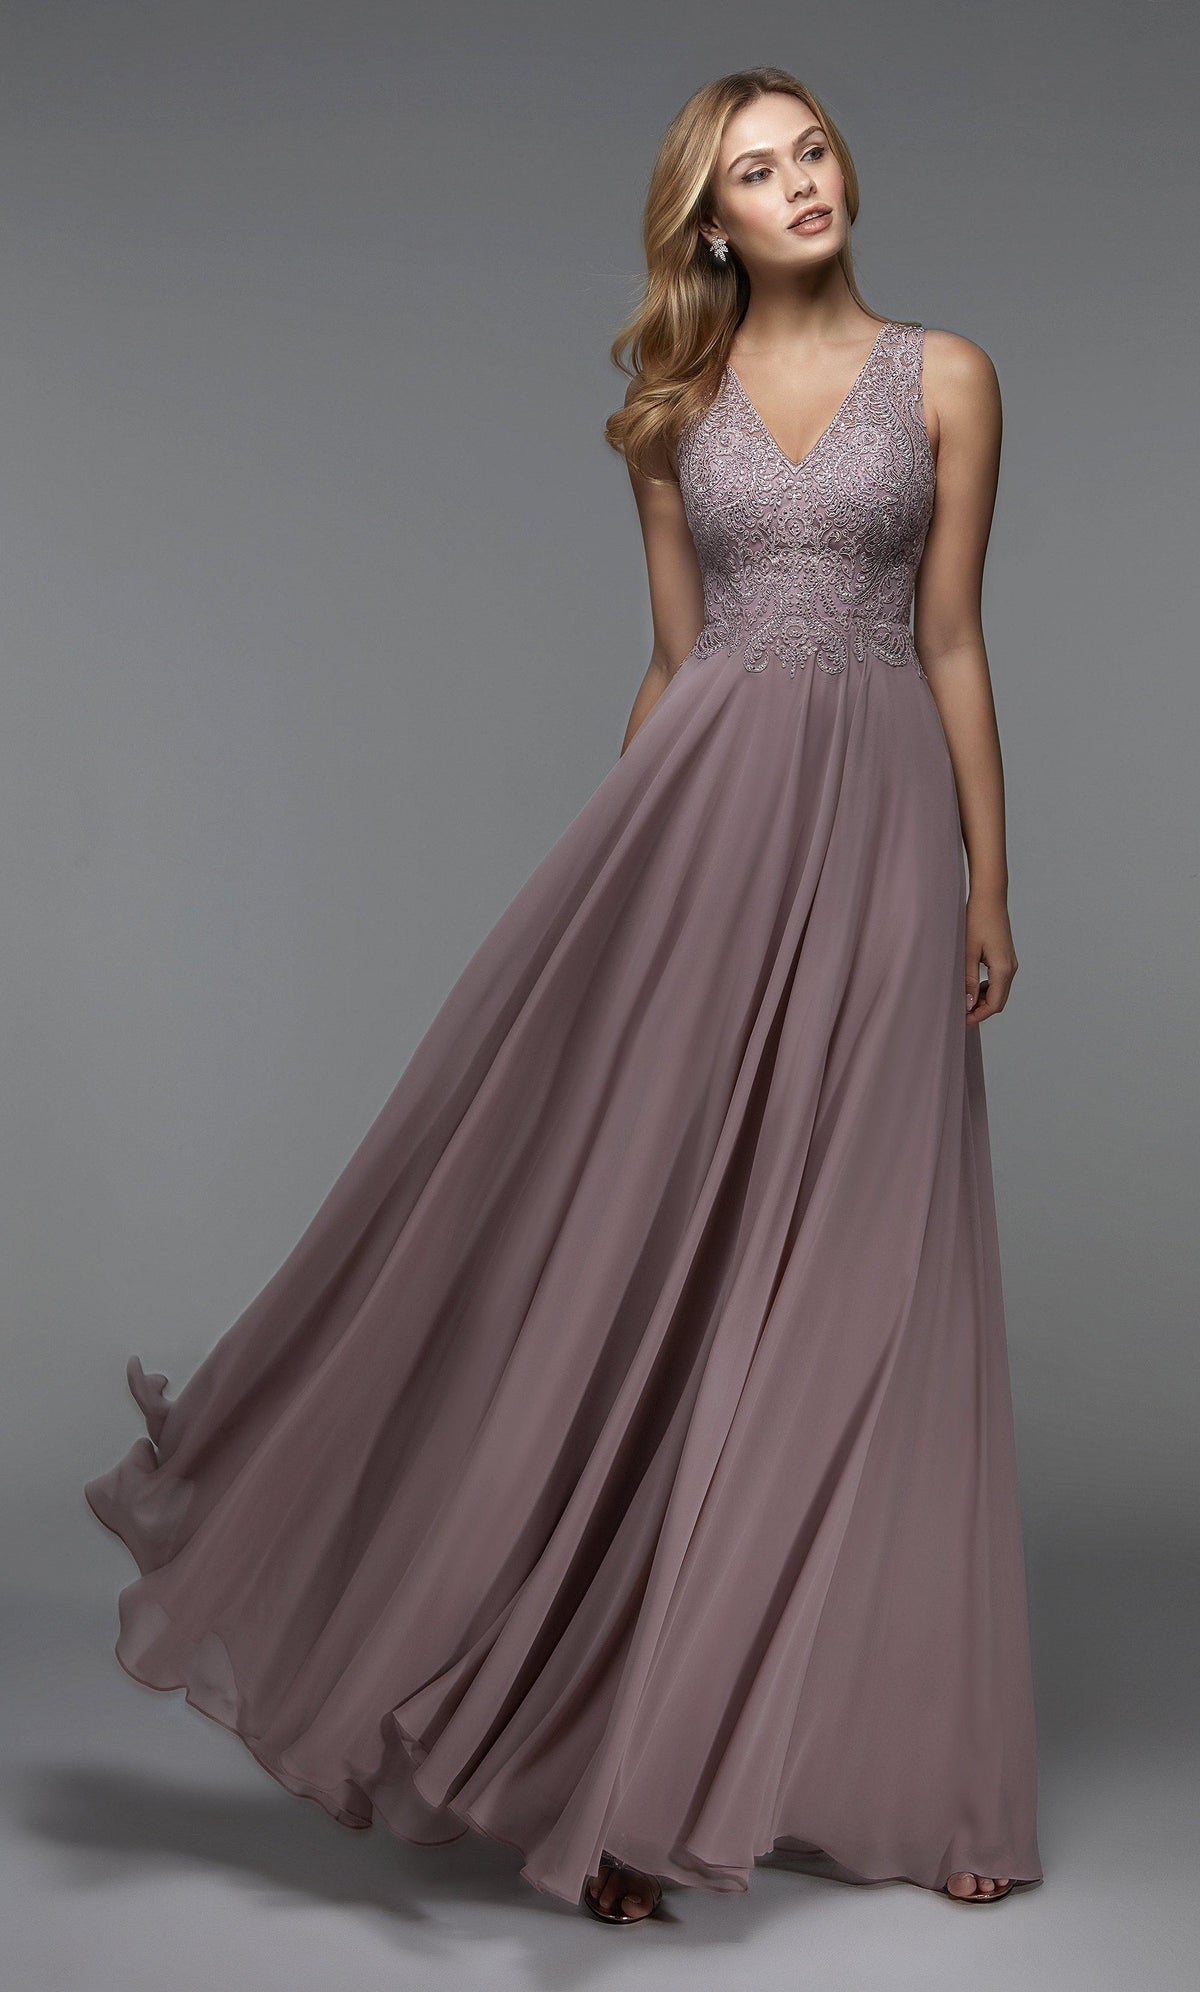 Formal Dress: 27528. Long Formal Dress, V-neck, Flowy Alyce Paris